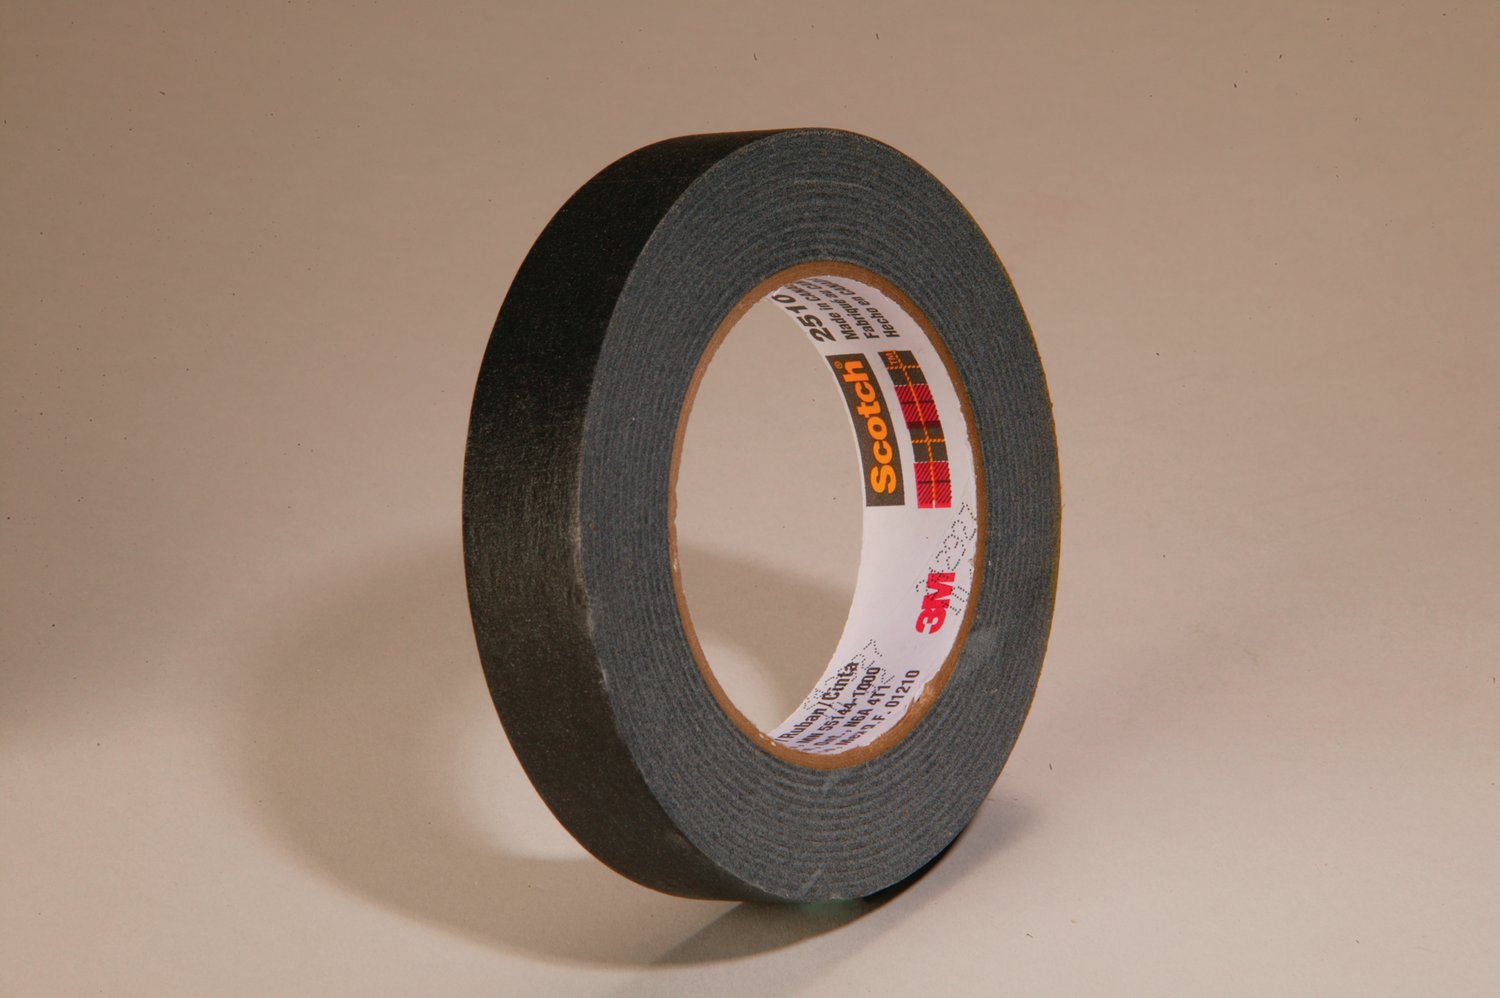 7100010115 - 3M Sealer Tape 2510, Black, 48 mm x 55 m, 5.6 mil, 24 Roll/Case